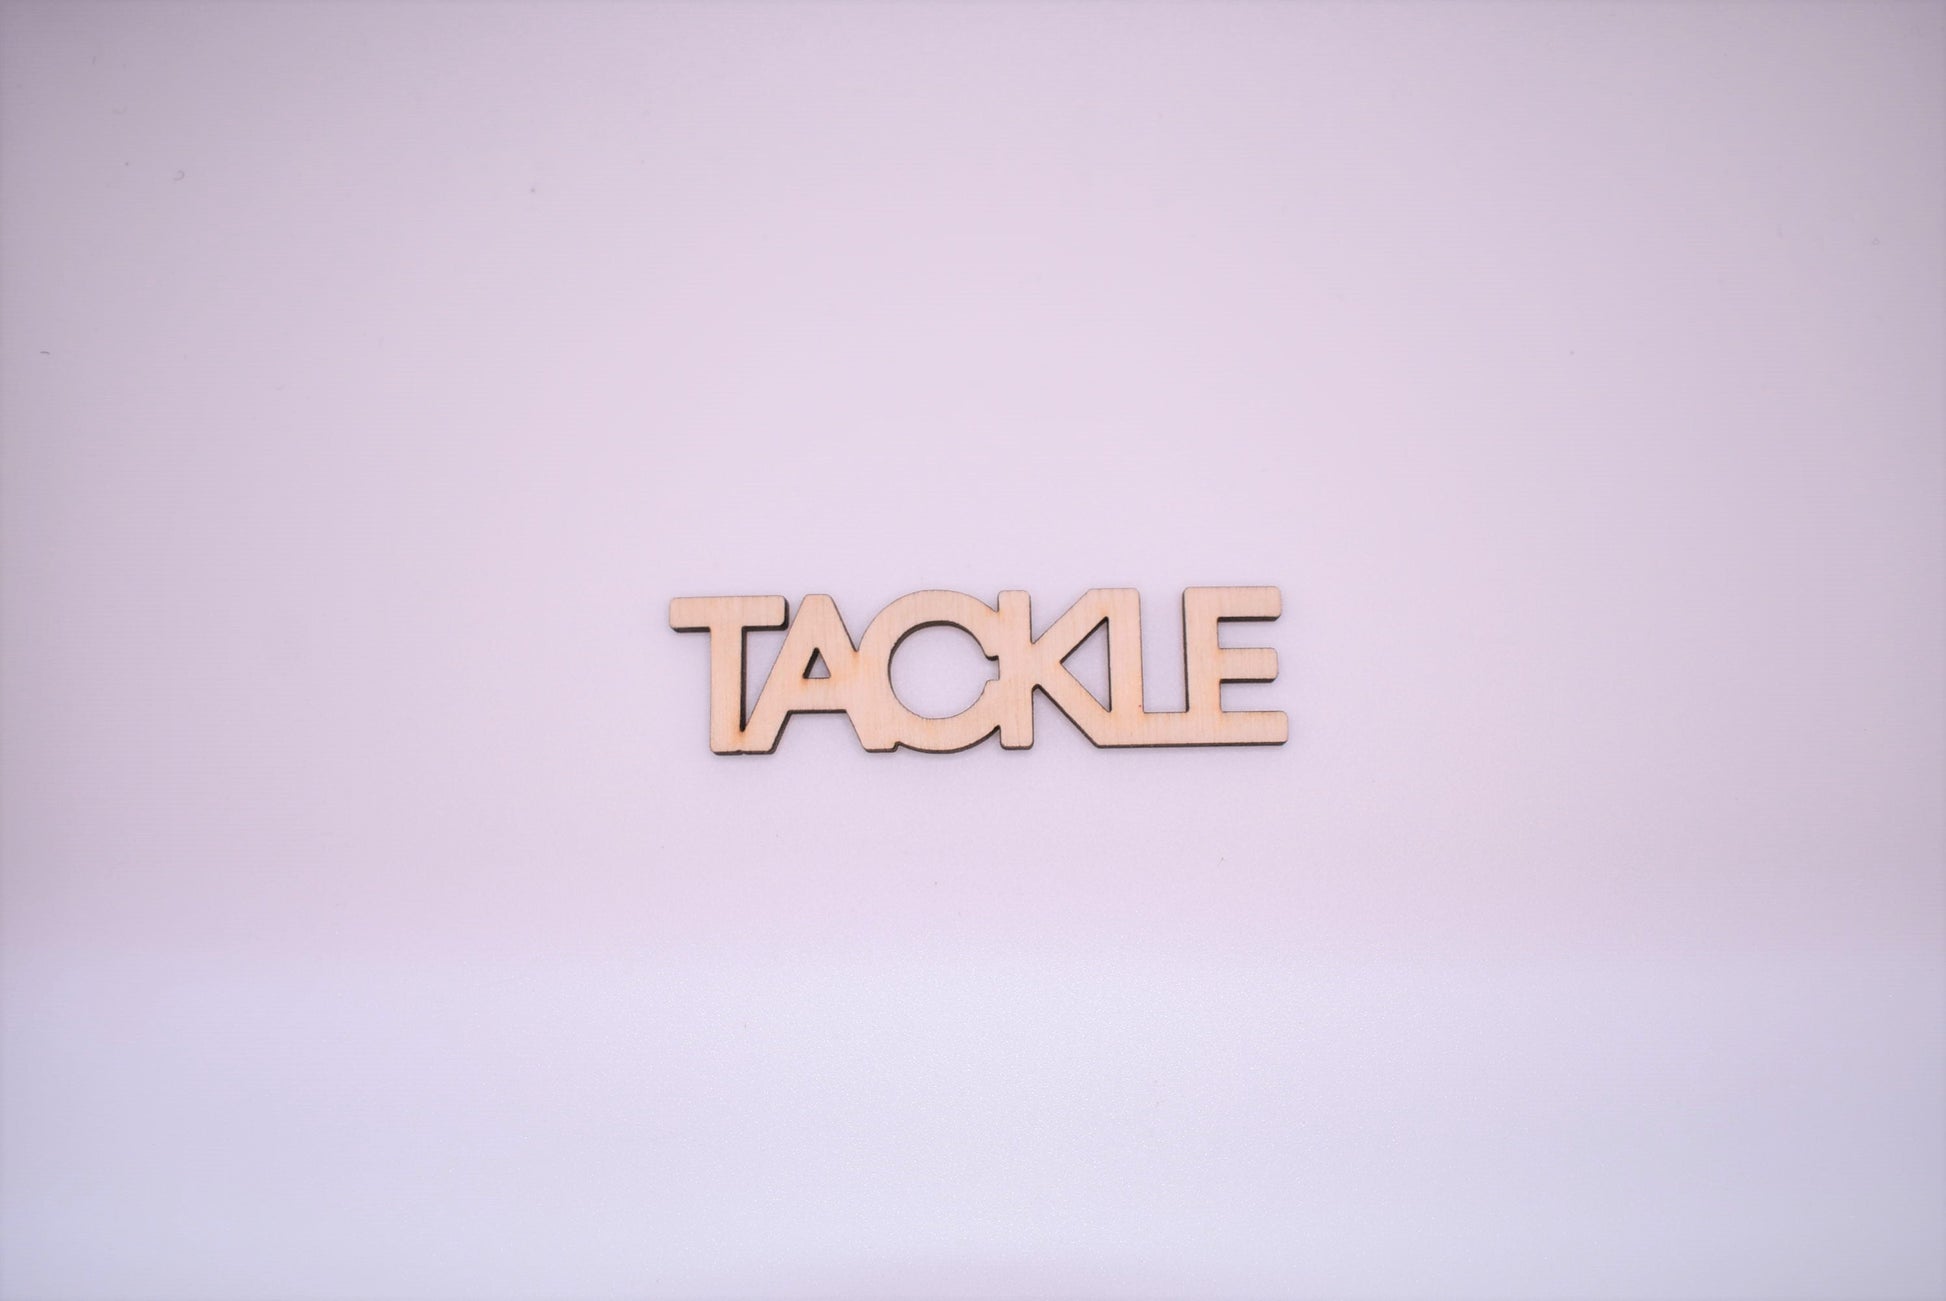 Tackle - Creative Designs By Kari